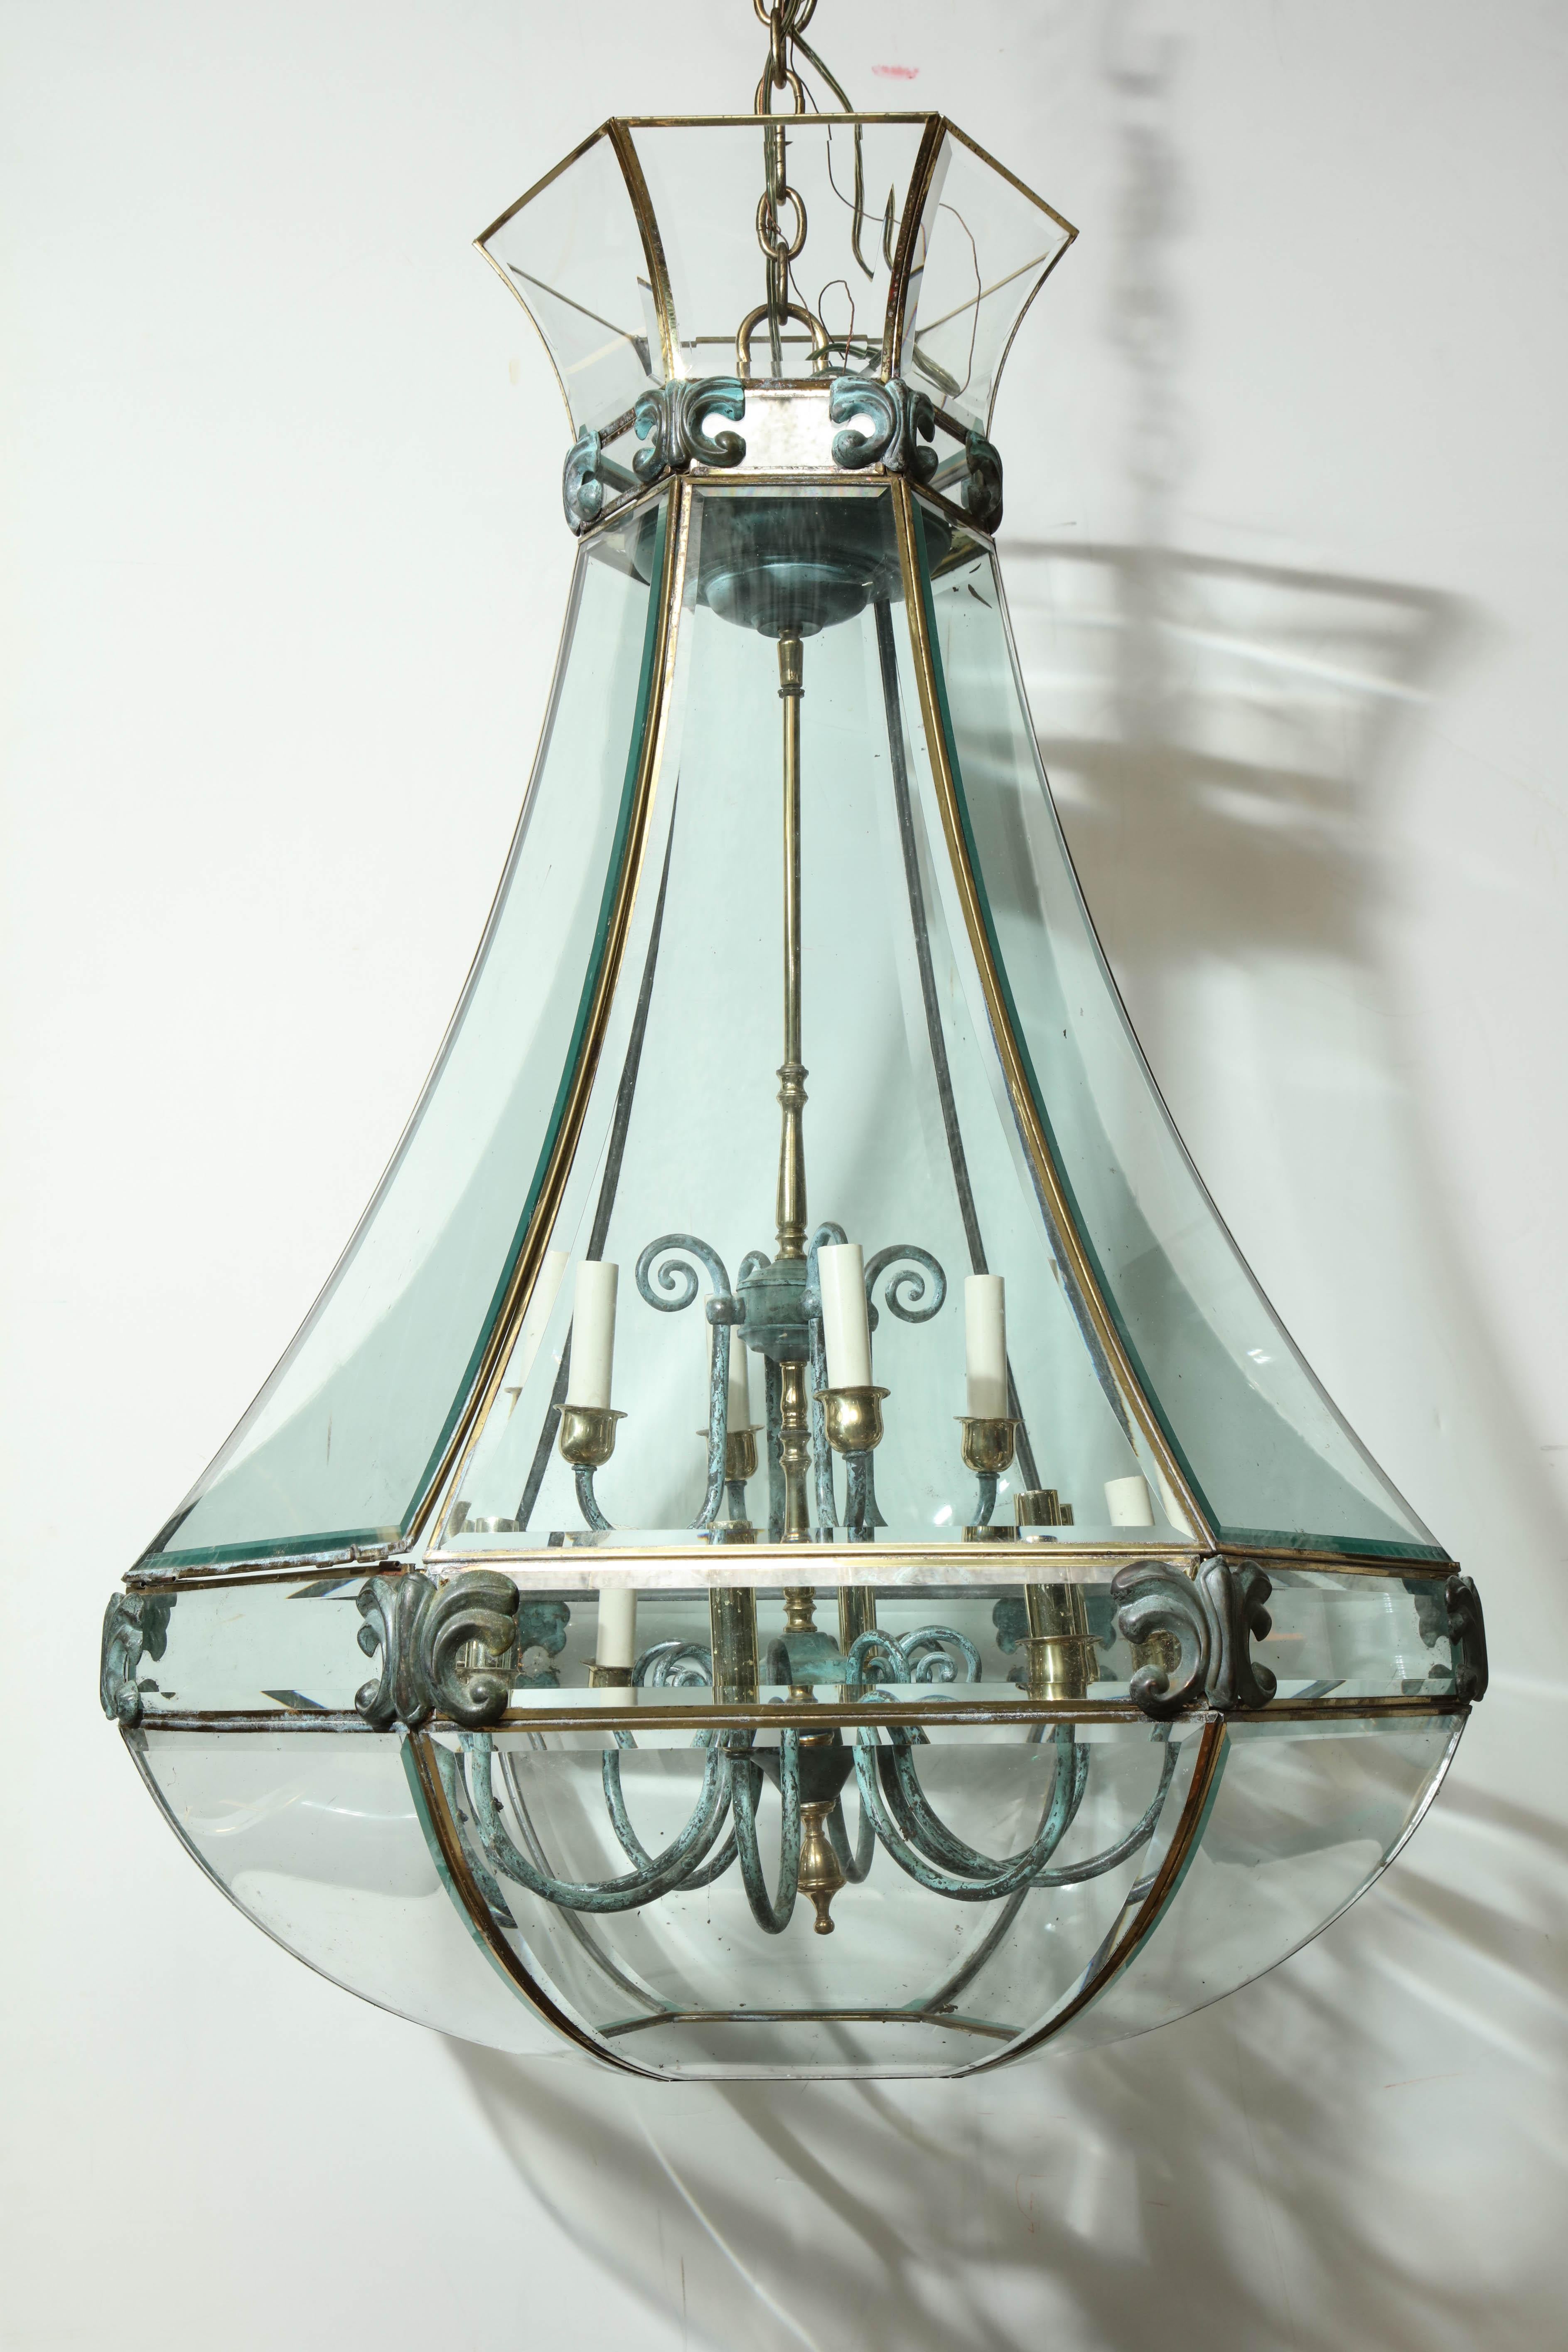 Hexagonal bevelled glass lantern with bronze trim.